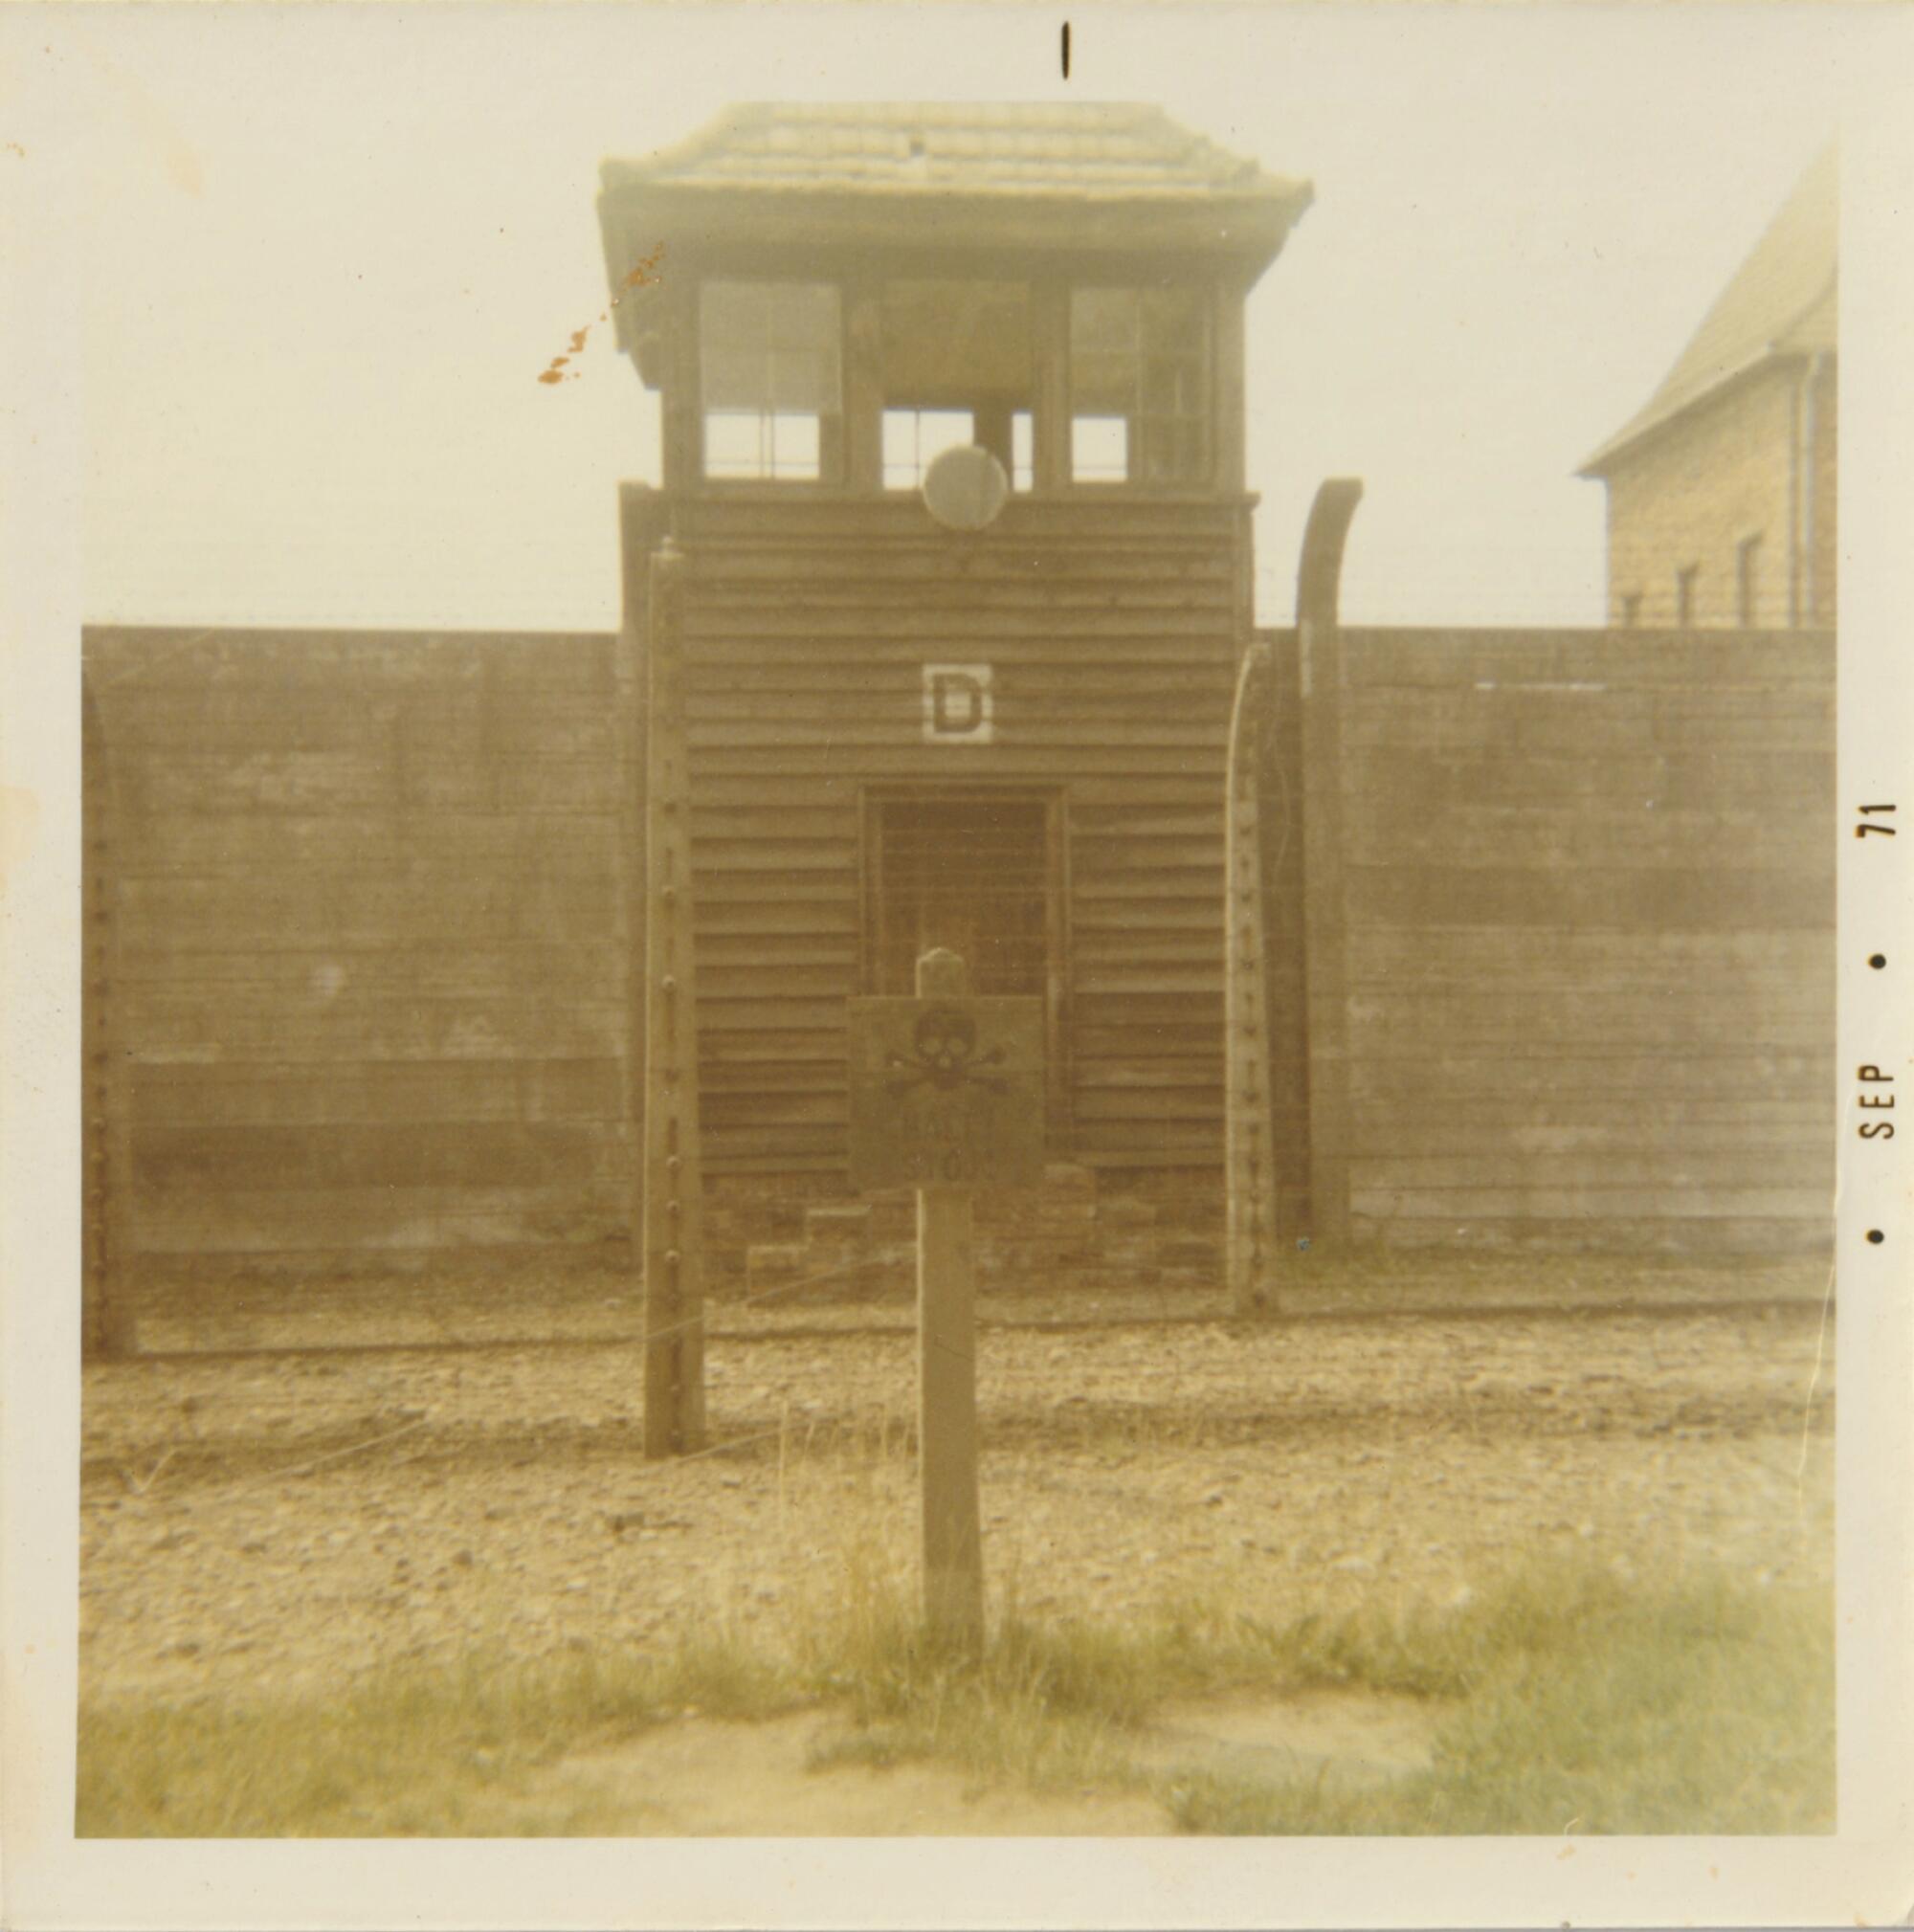 A photo of Auschwitz made by Madeleine's great grandfather Arthur Hordinski in 1971.